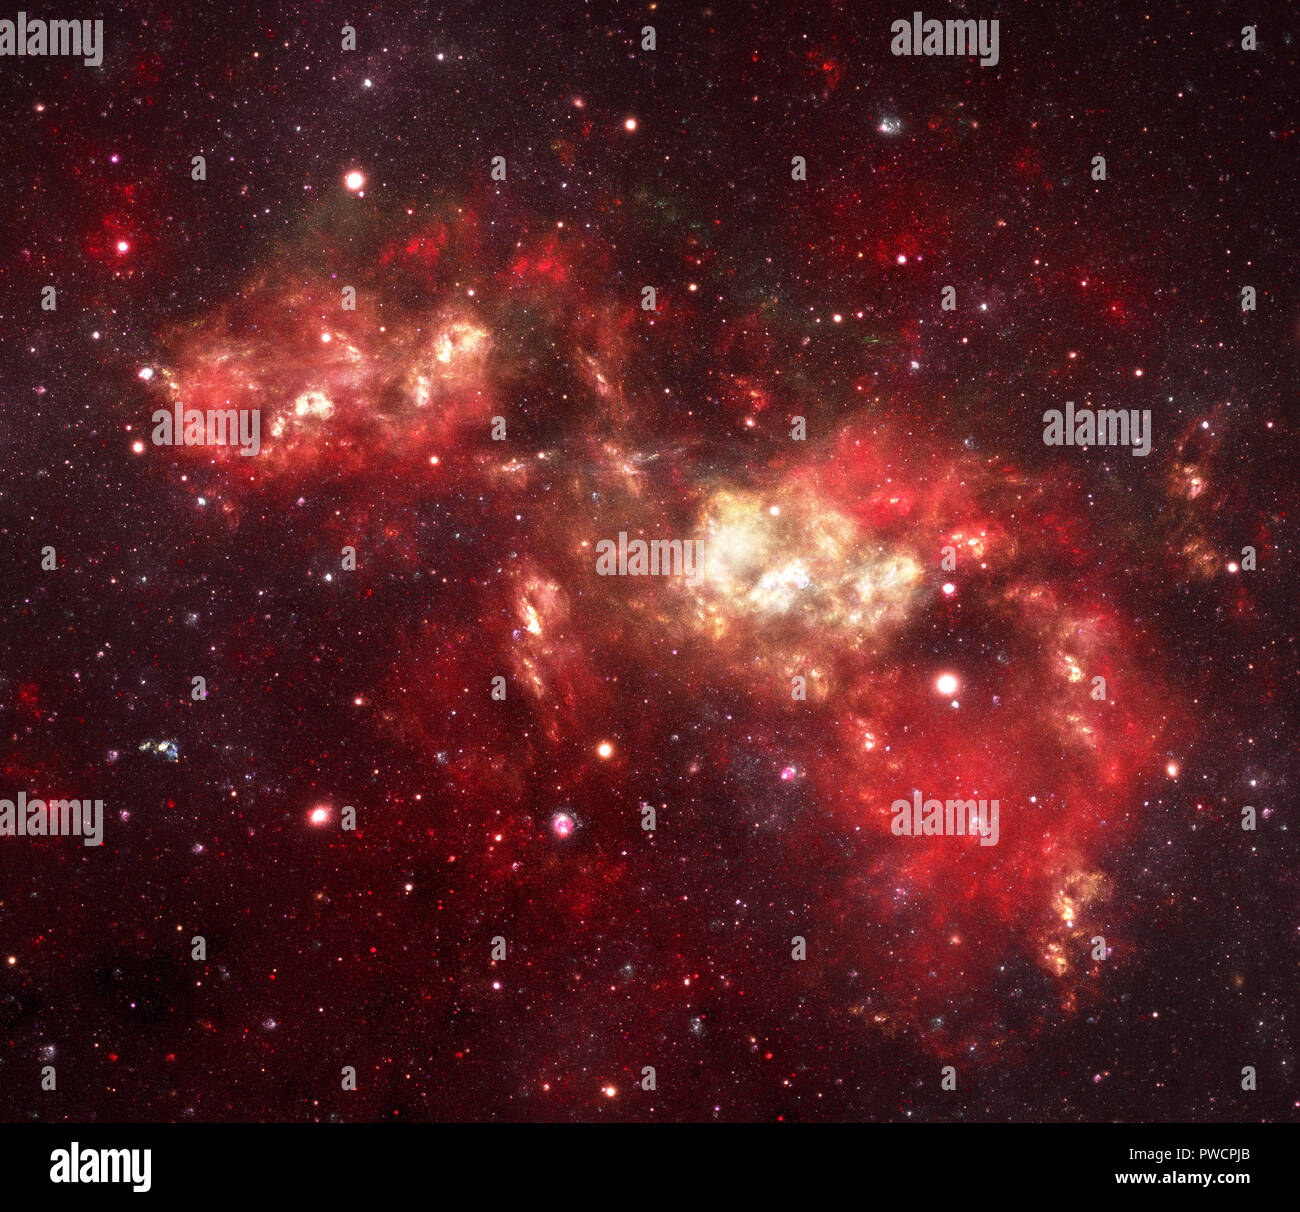 Red stellar system background Stock Photo